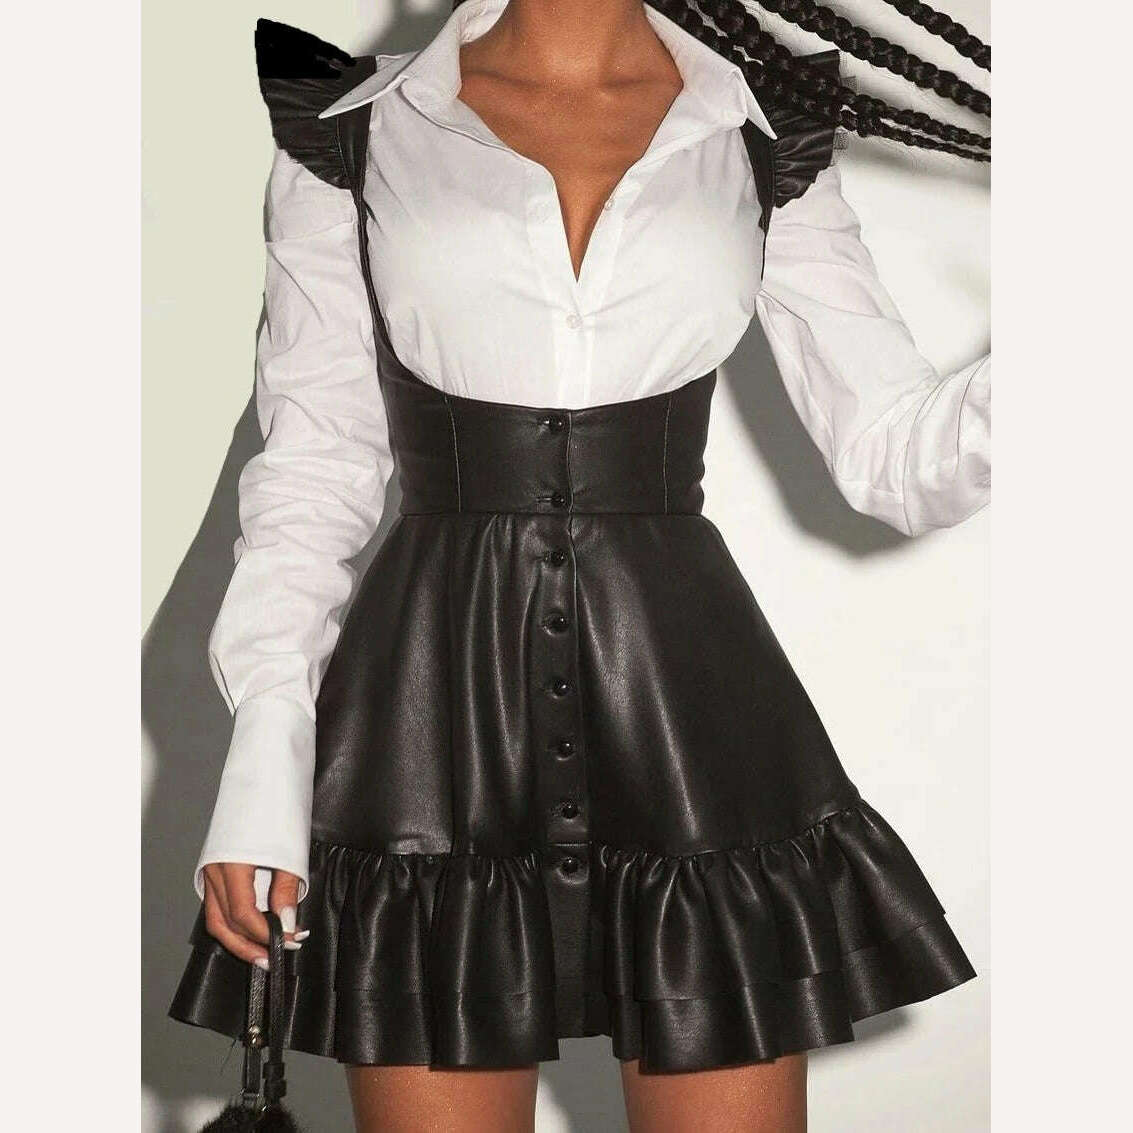 KIMLUD, Clacive Sexy Black Pu Leather Dress Sets For Women 2 Pieces Fashion Long Sleeve Shirt With High Waist Pleated Mini Dress Set, KIMLUD Womens Clothes